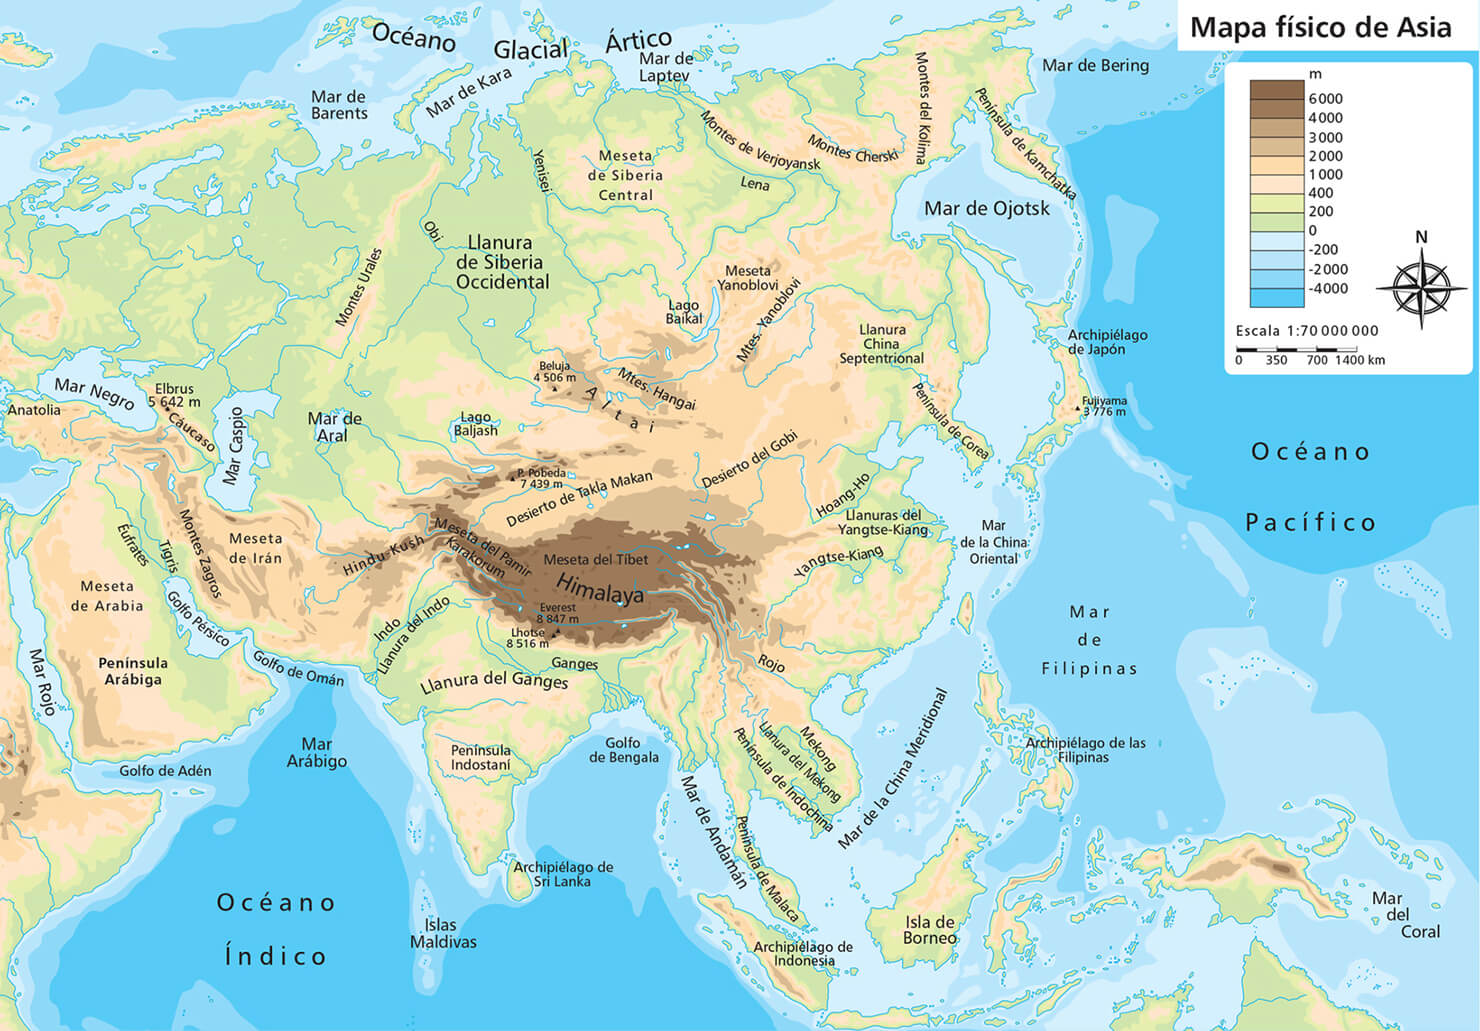 Mapa Fisico De Asia Mapa De Relieve De Asia Jcyl Mapas Interactivos Images 8552